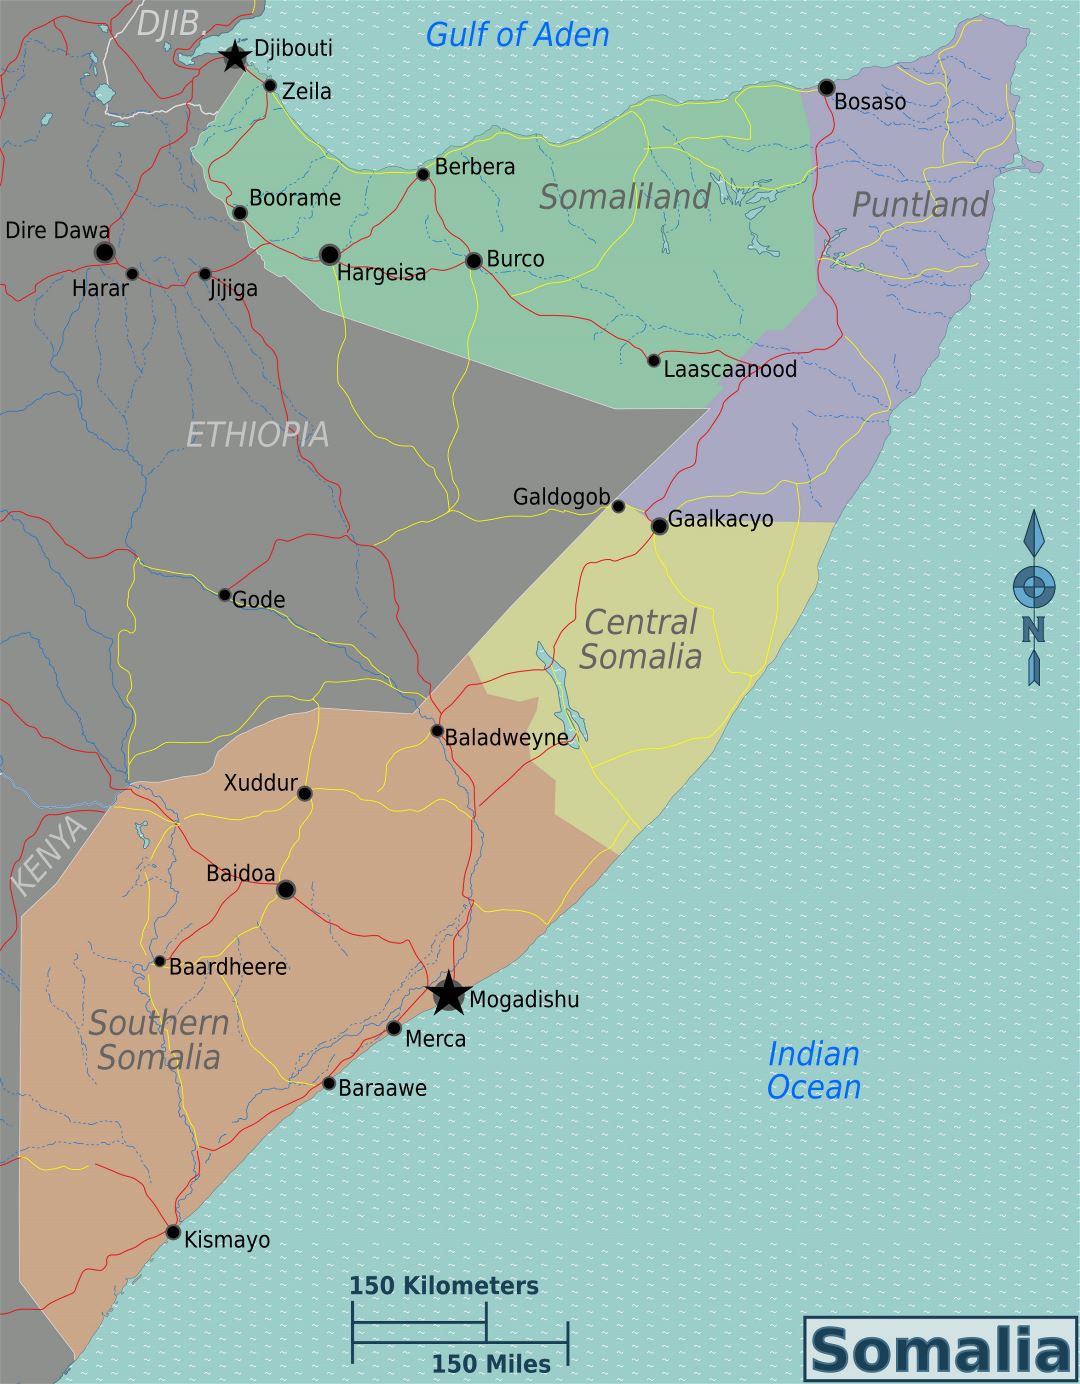 Large regions map of Somalia